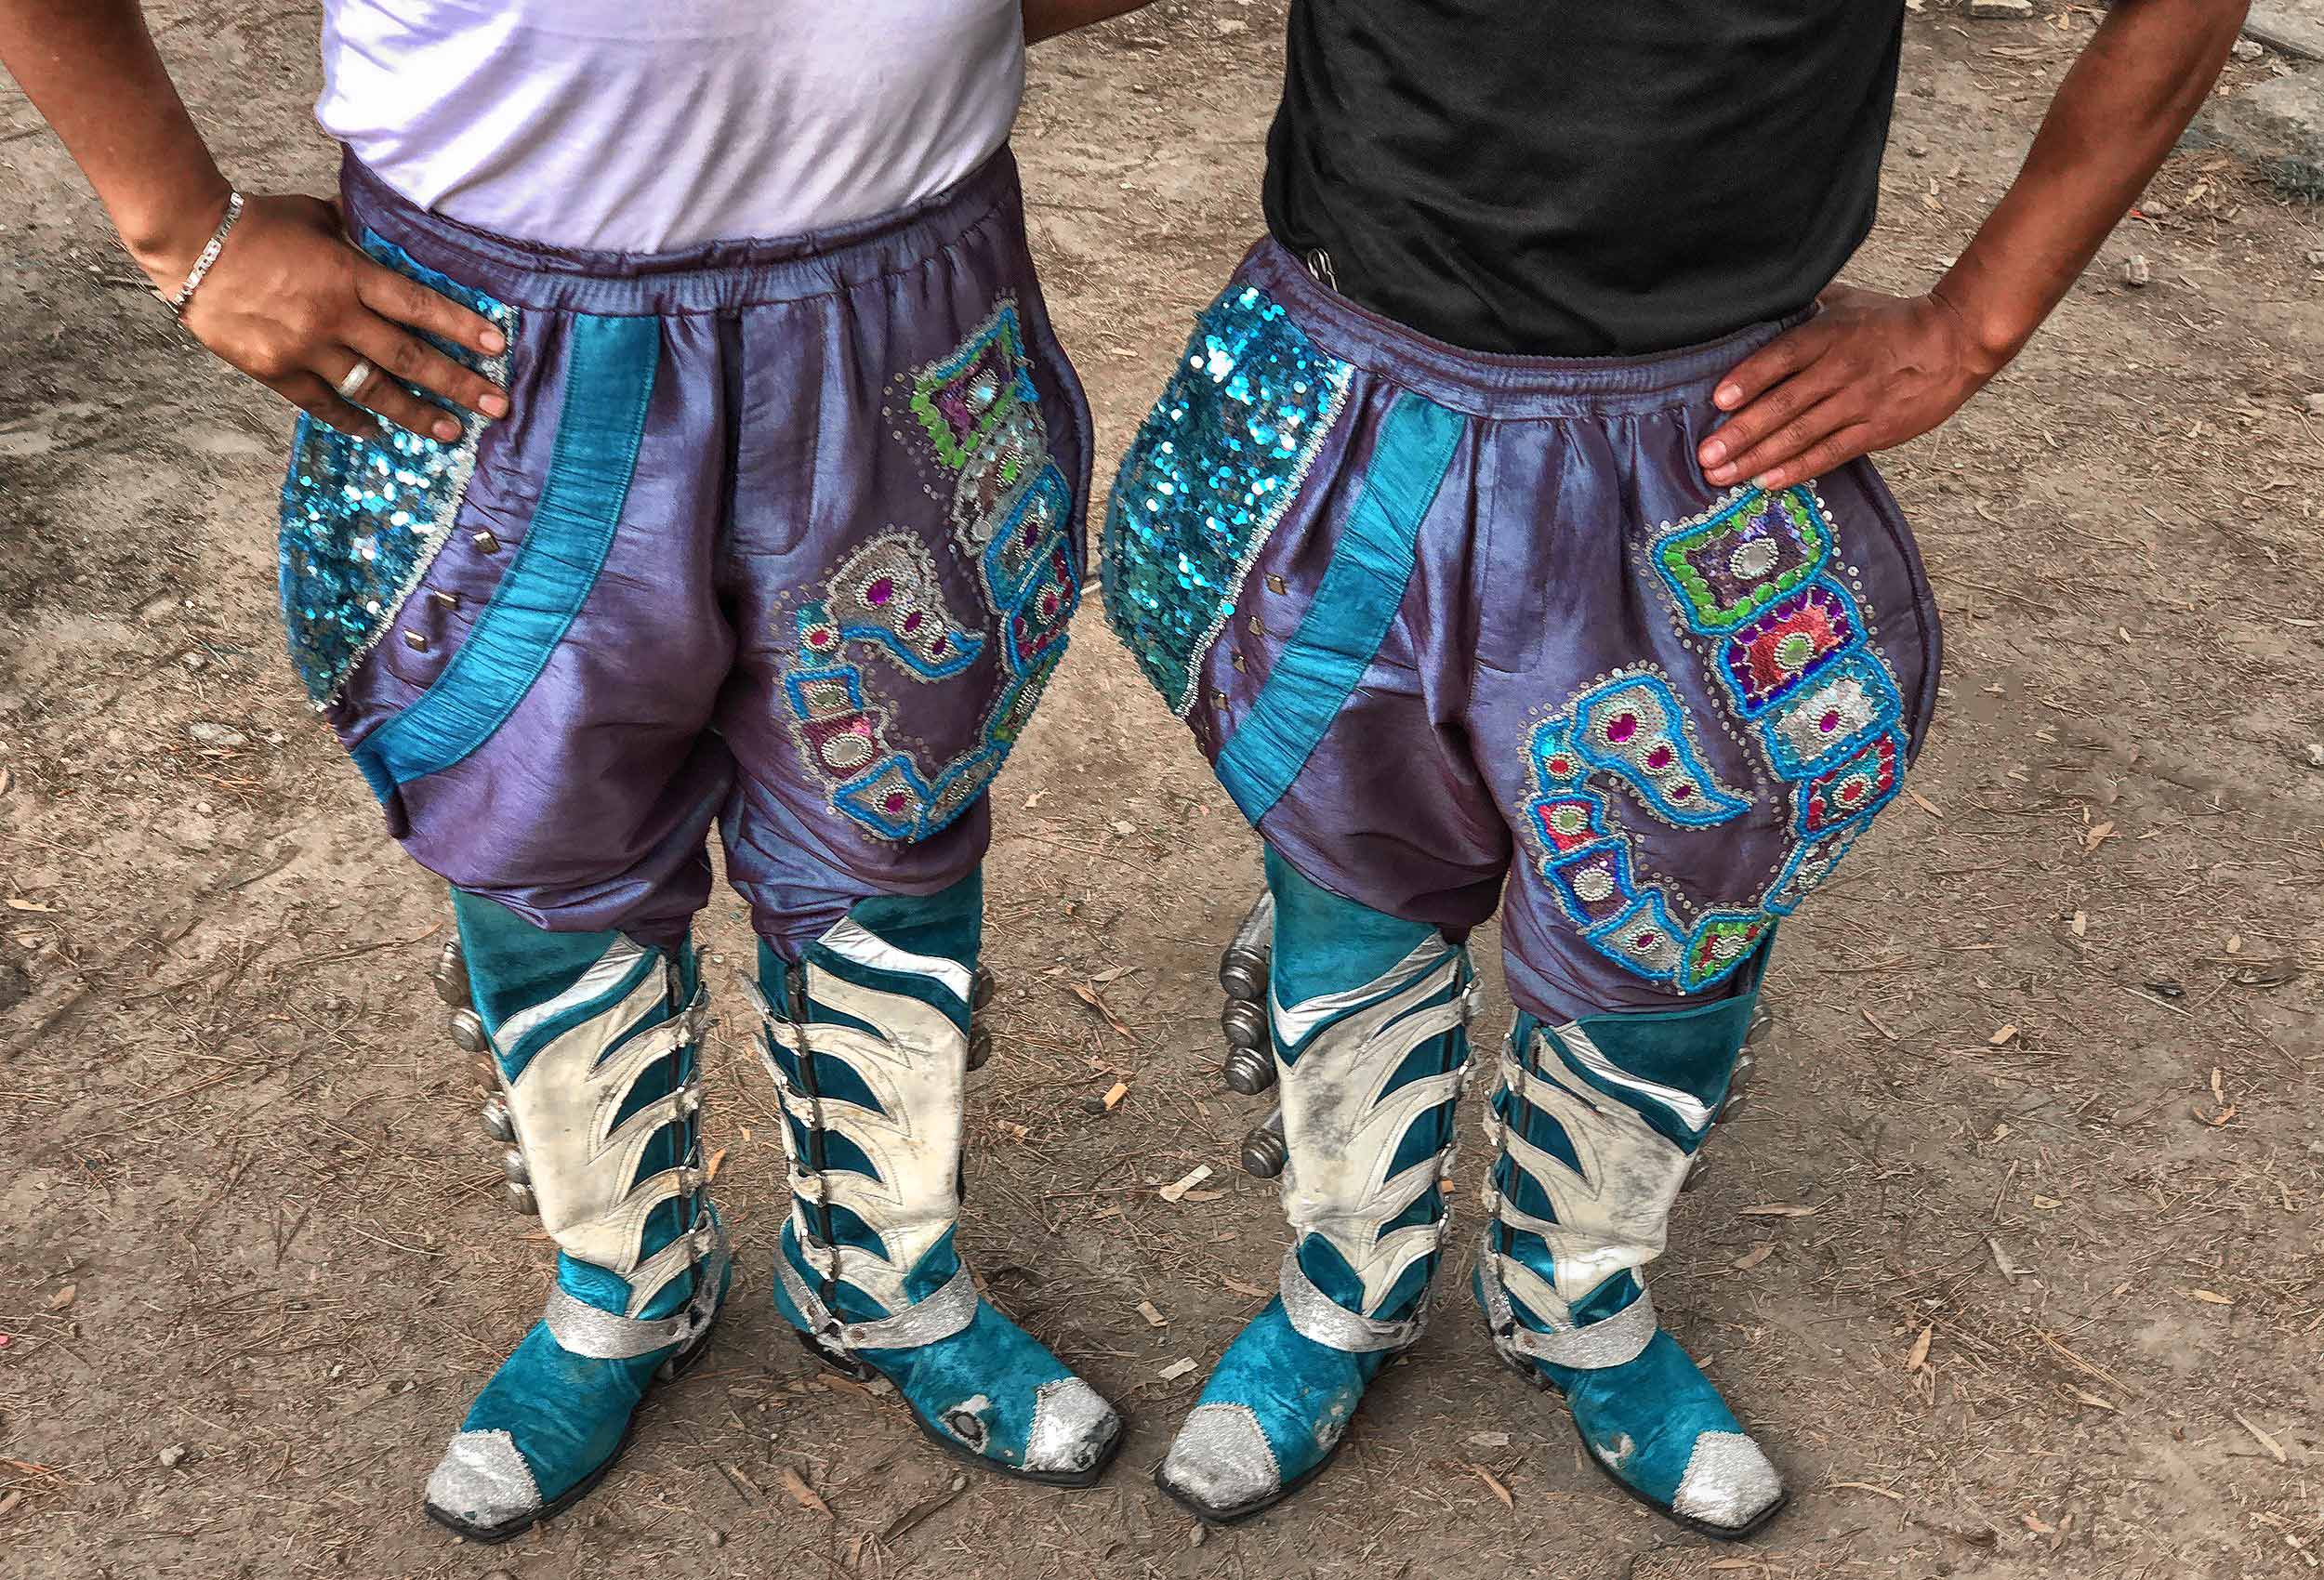 two-mayan-men-in-costume-in-a-park-in-quito-ecuador